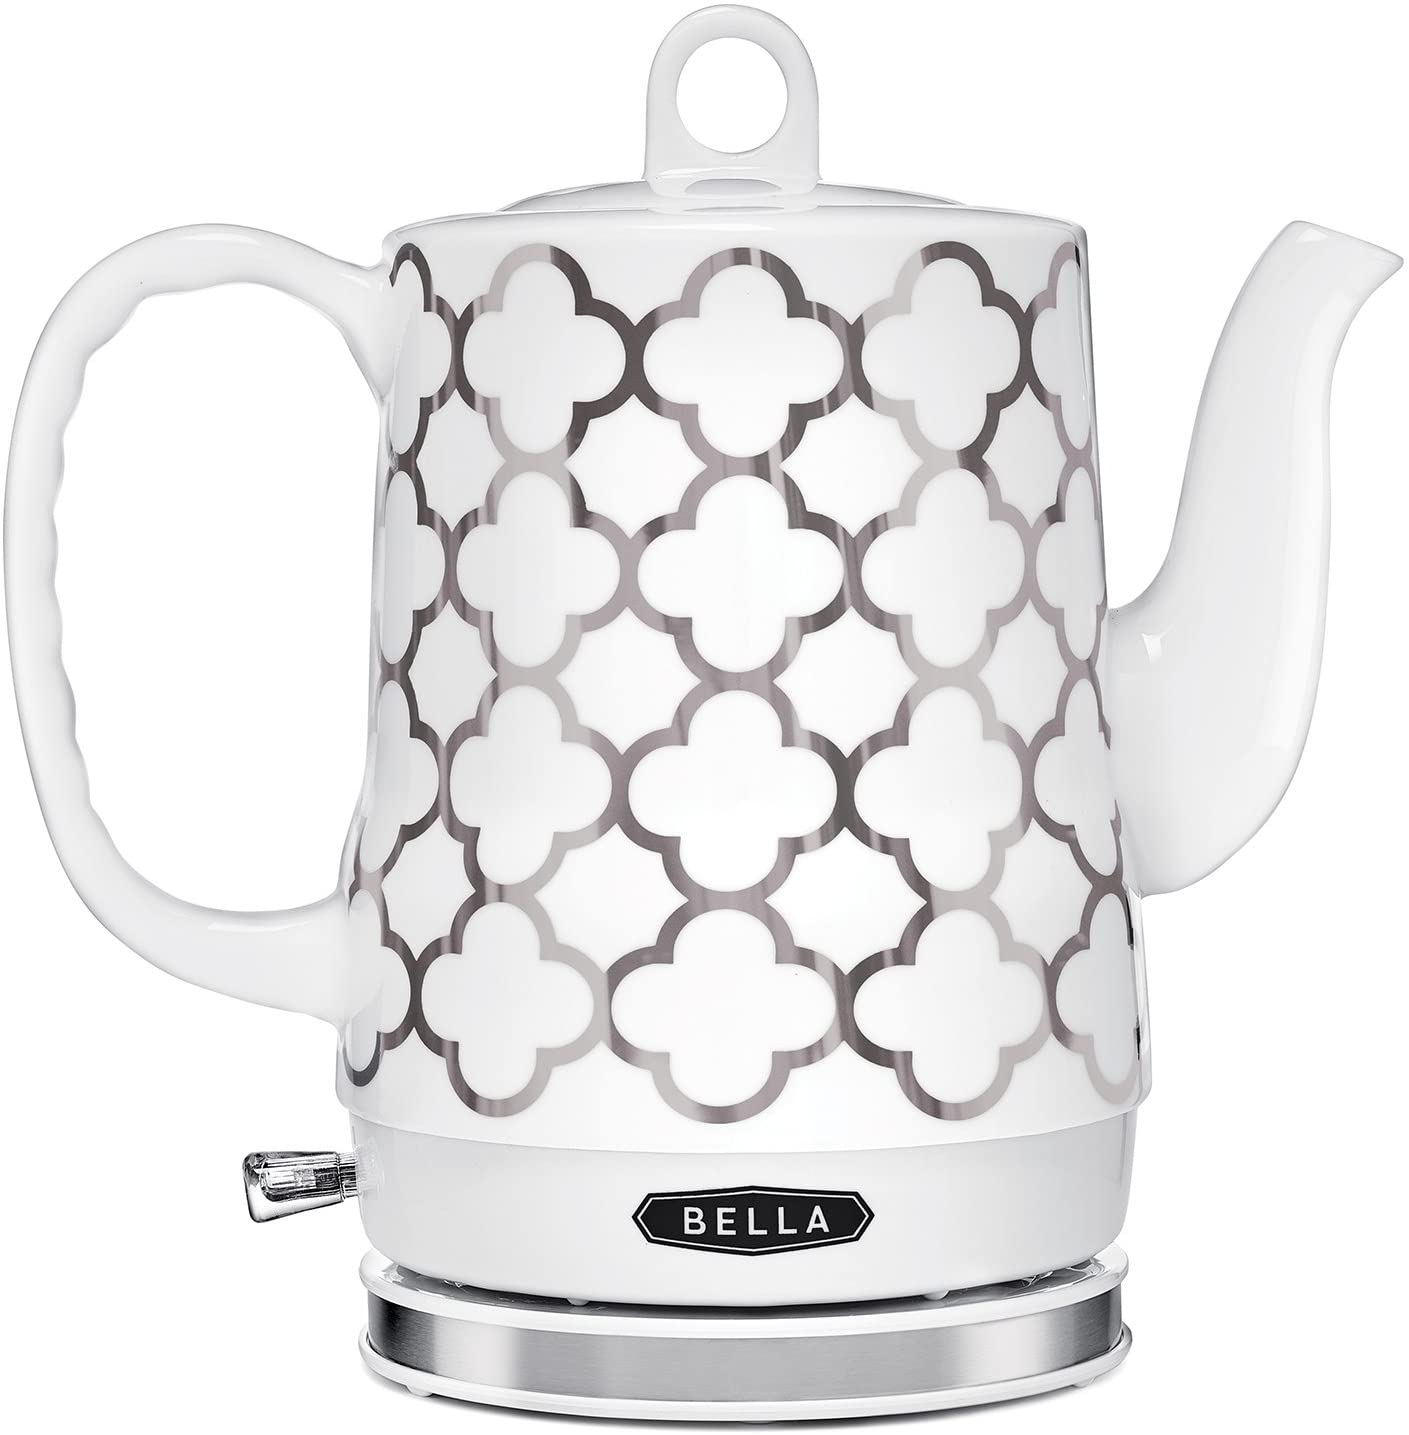 BELLA Electric Ceramic Tea Kettle Detachable Swivel Base & Boil Dry Protection Boil Water Kettle - 1.2 L, Copper